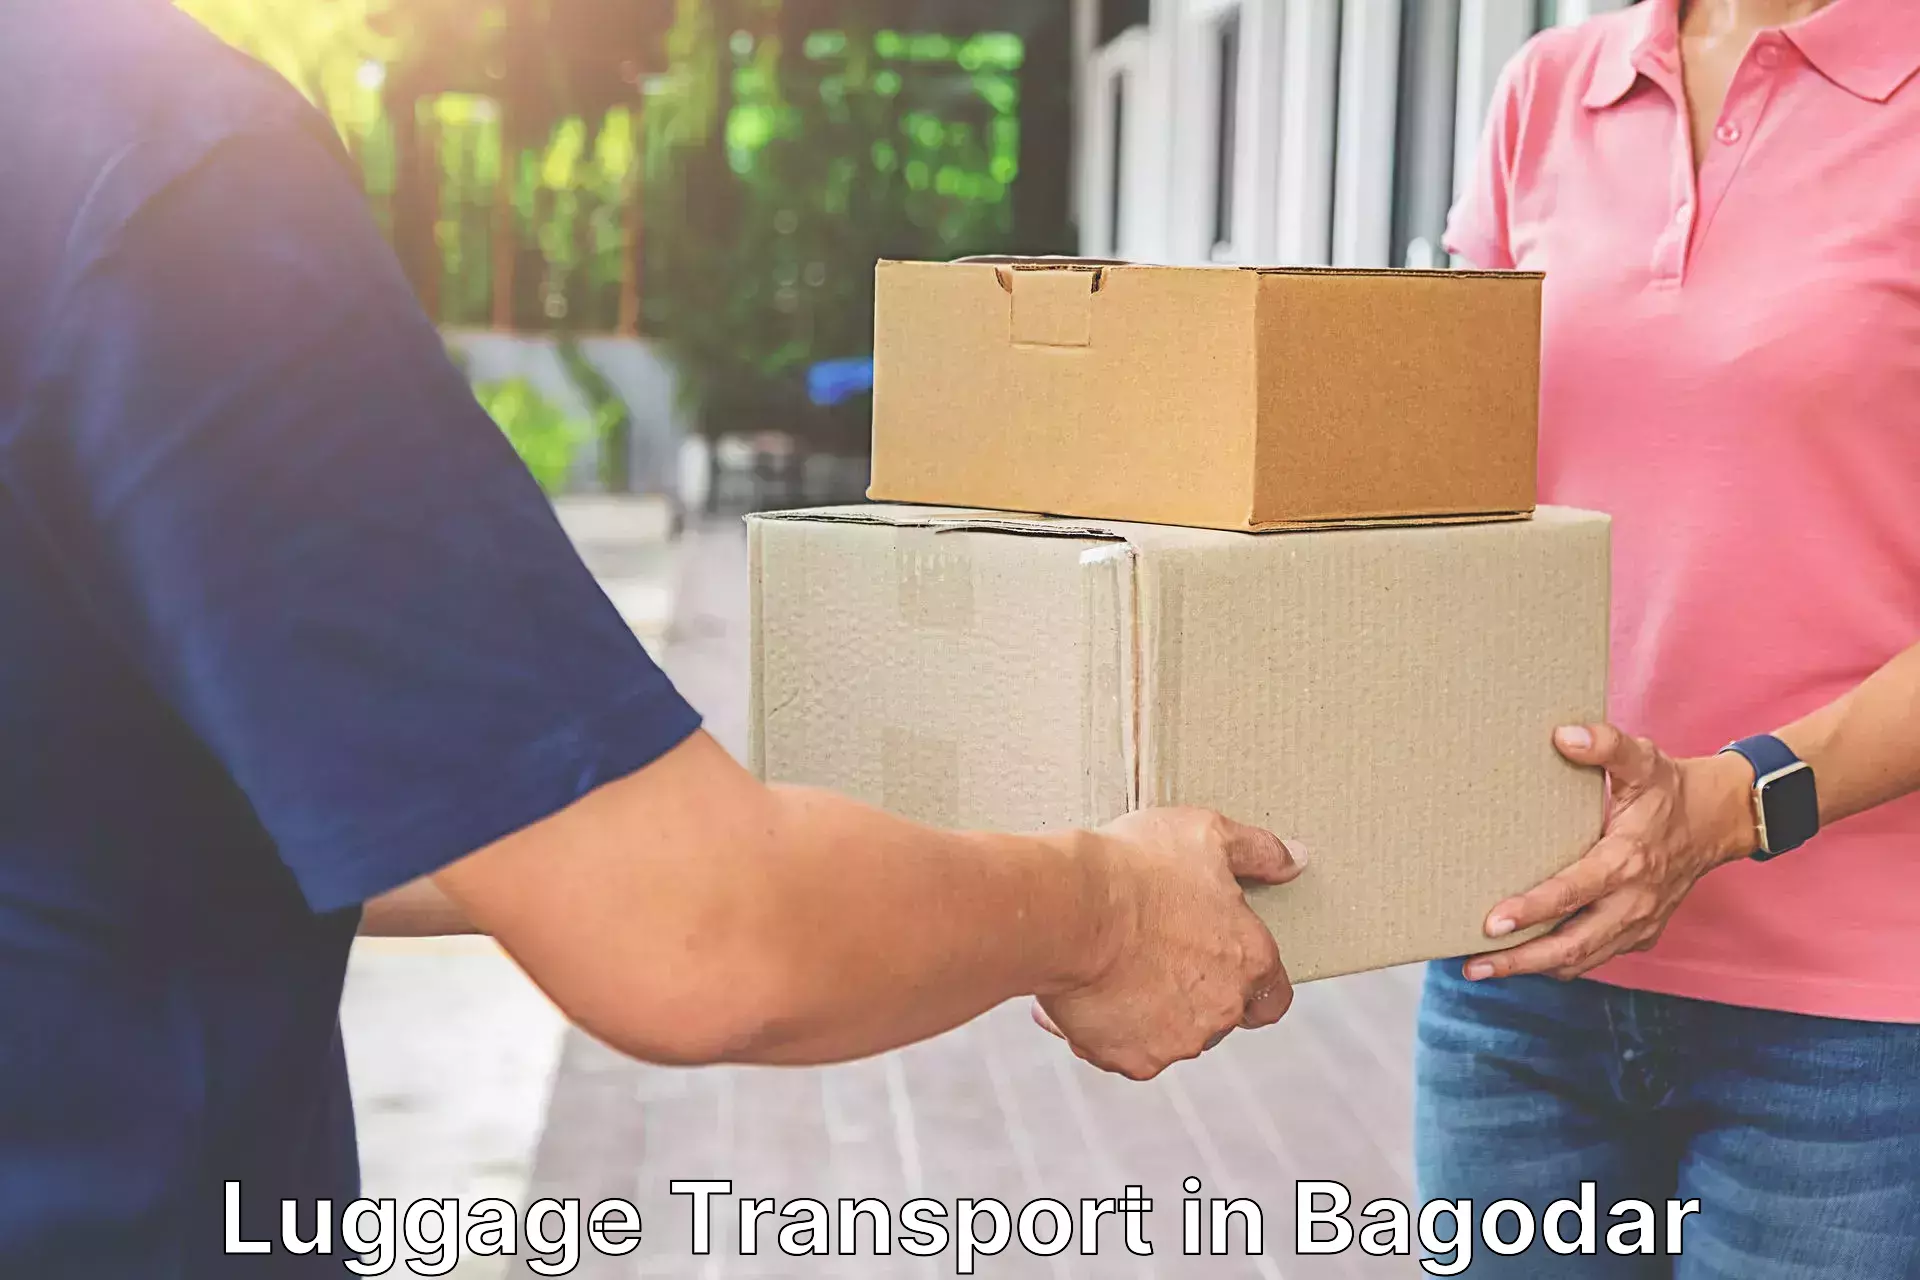 Discounted baggage transport in Bagodar